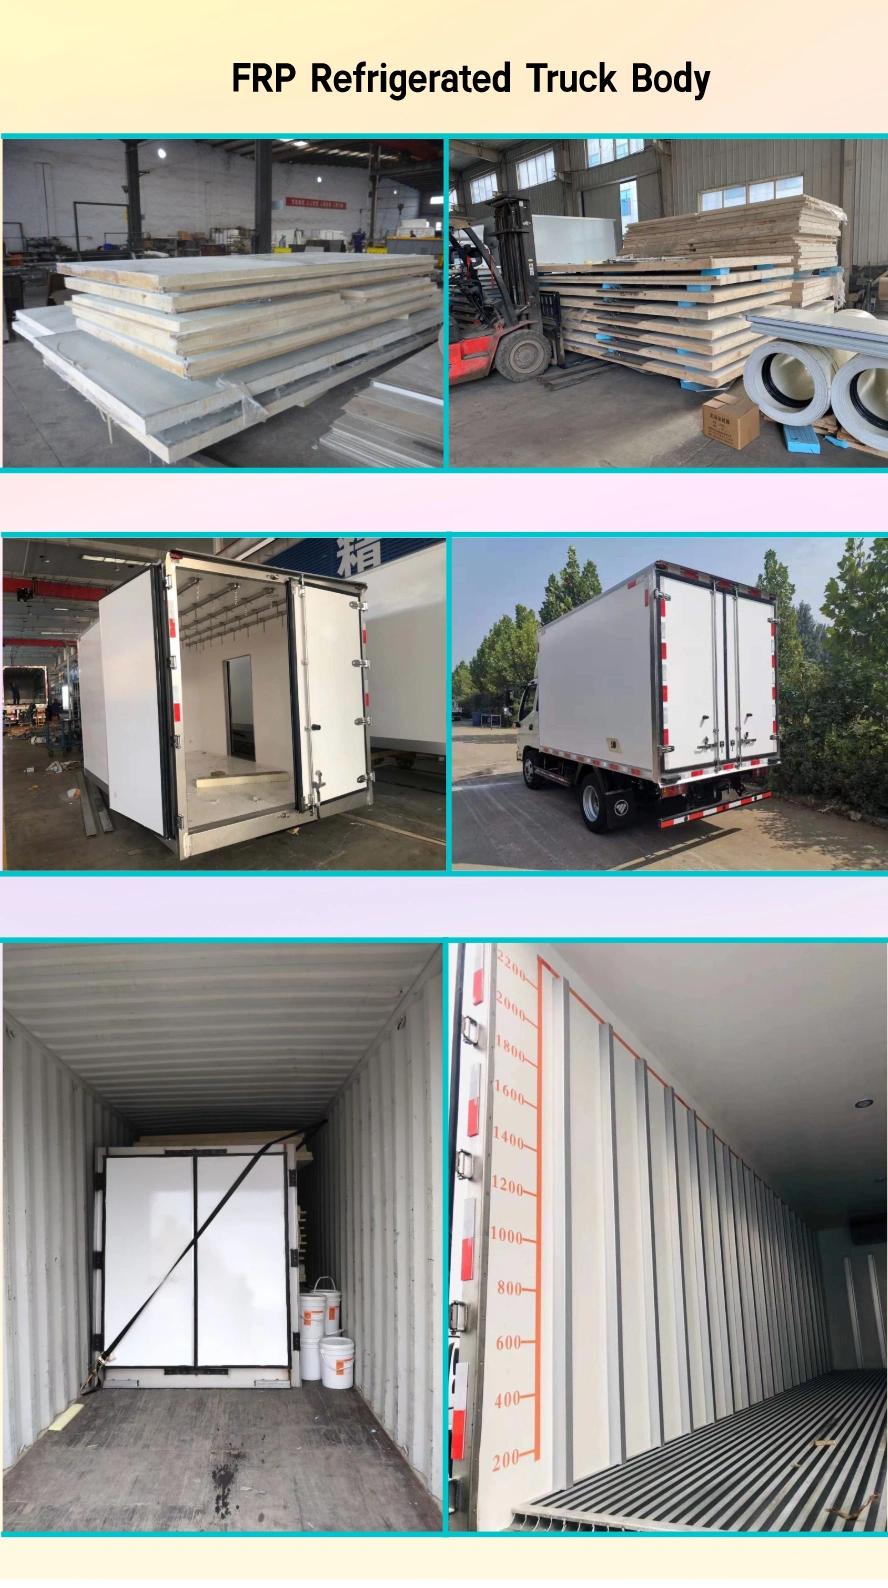 Bueno Brand XPS Insulated Panel/ Corrugated Aluminium Floor Box/ Refrigerator Truck Body